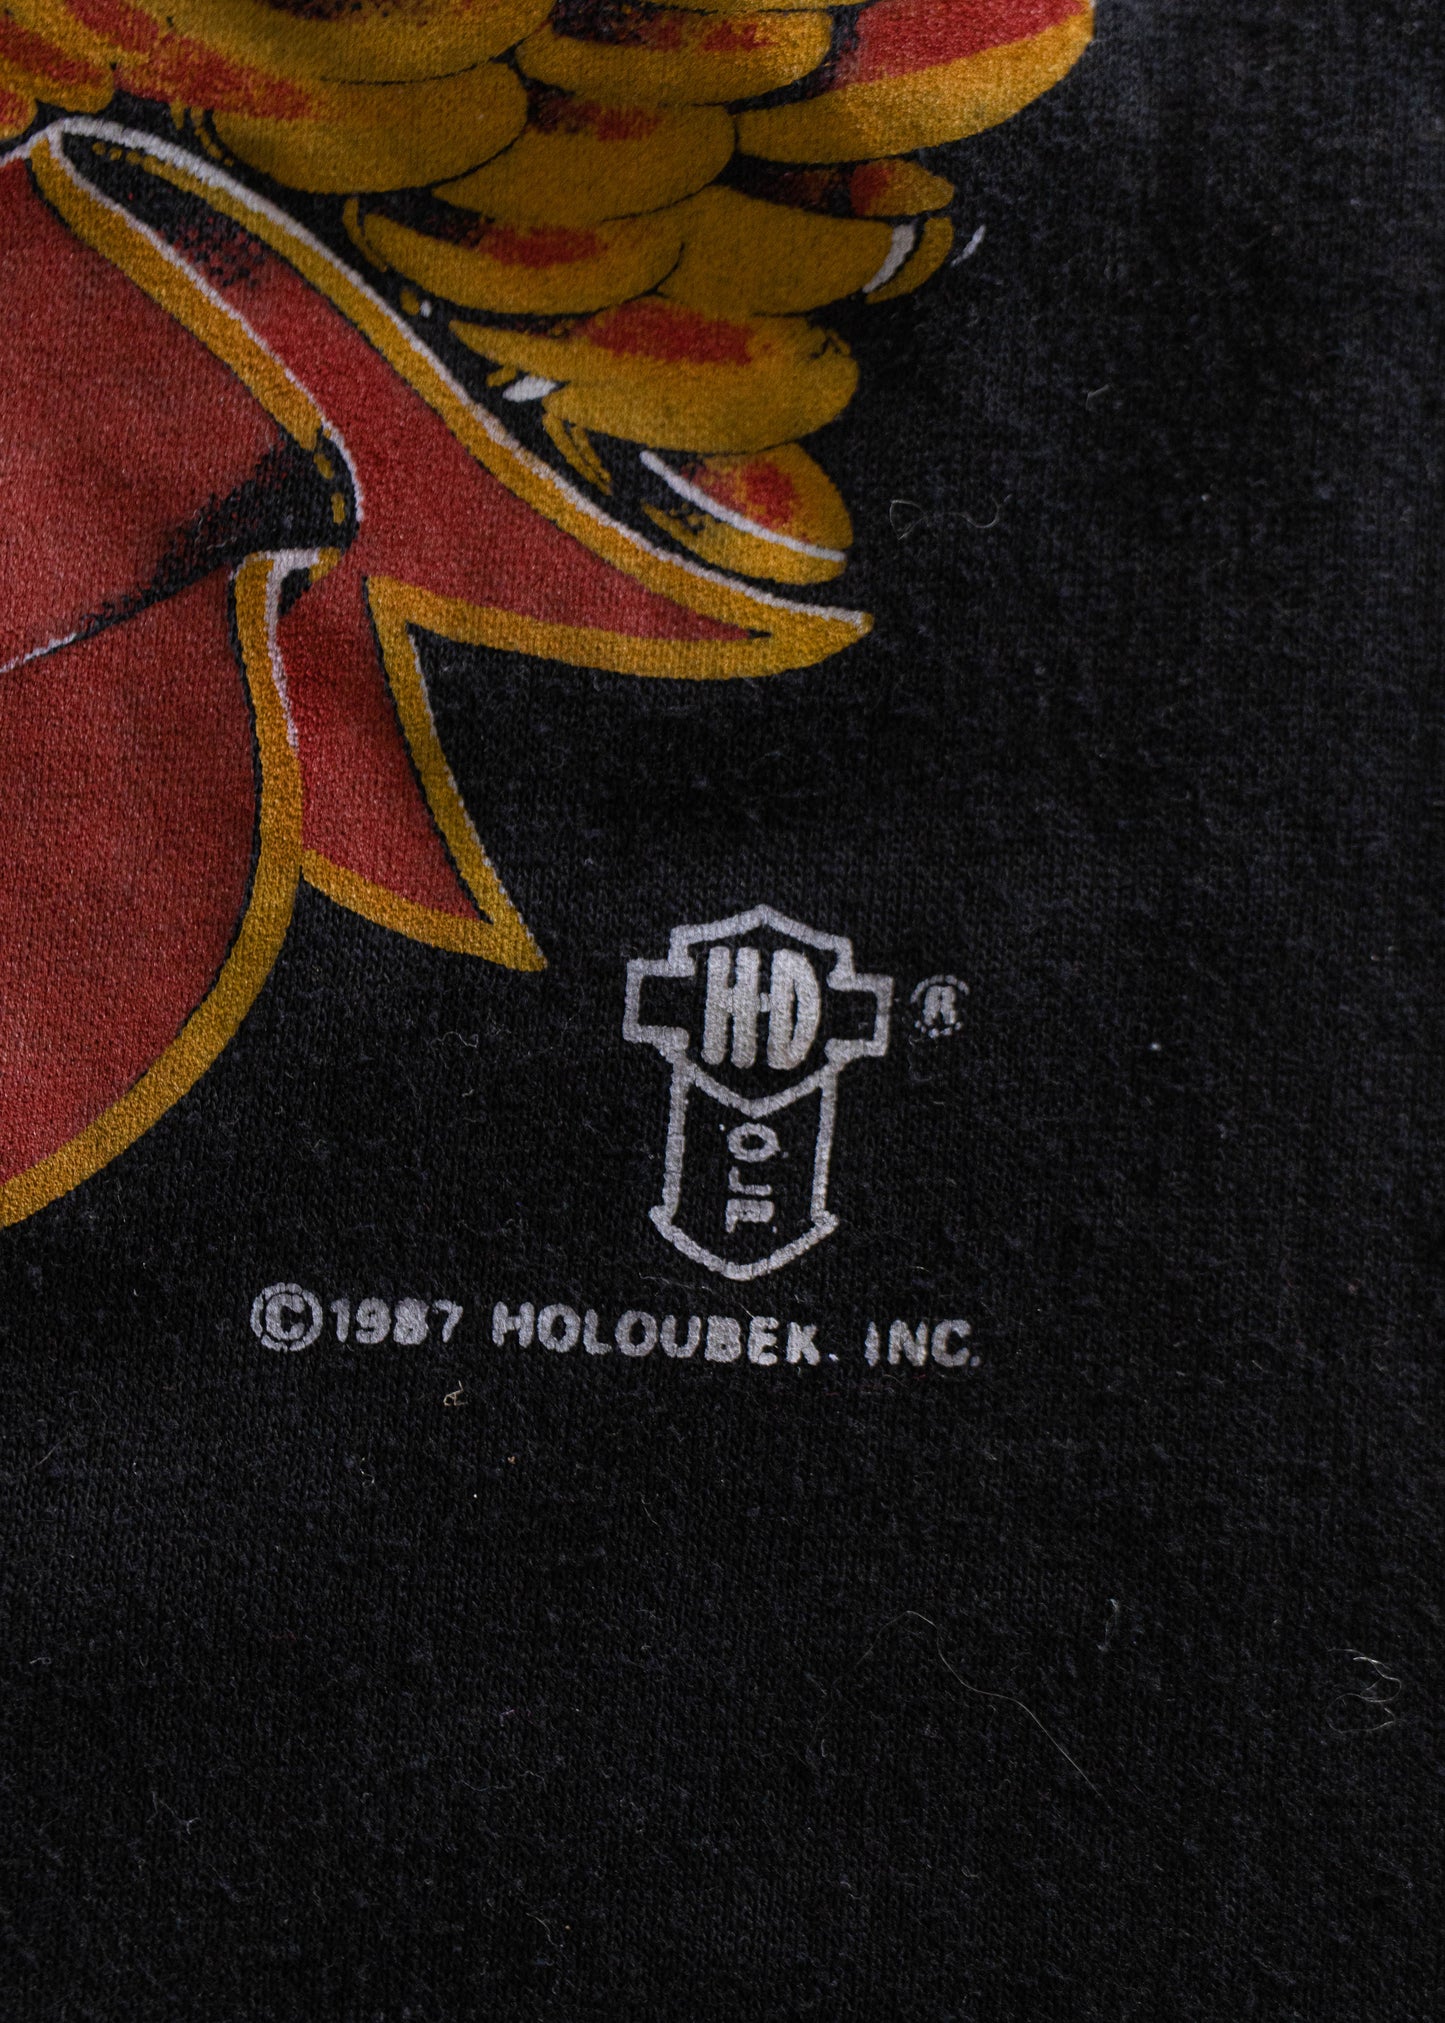 1987 Center Star Harley-Davidson T-Shirt Size M/L